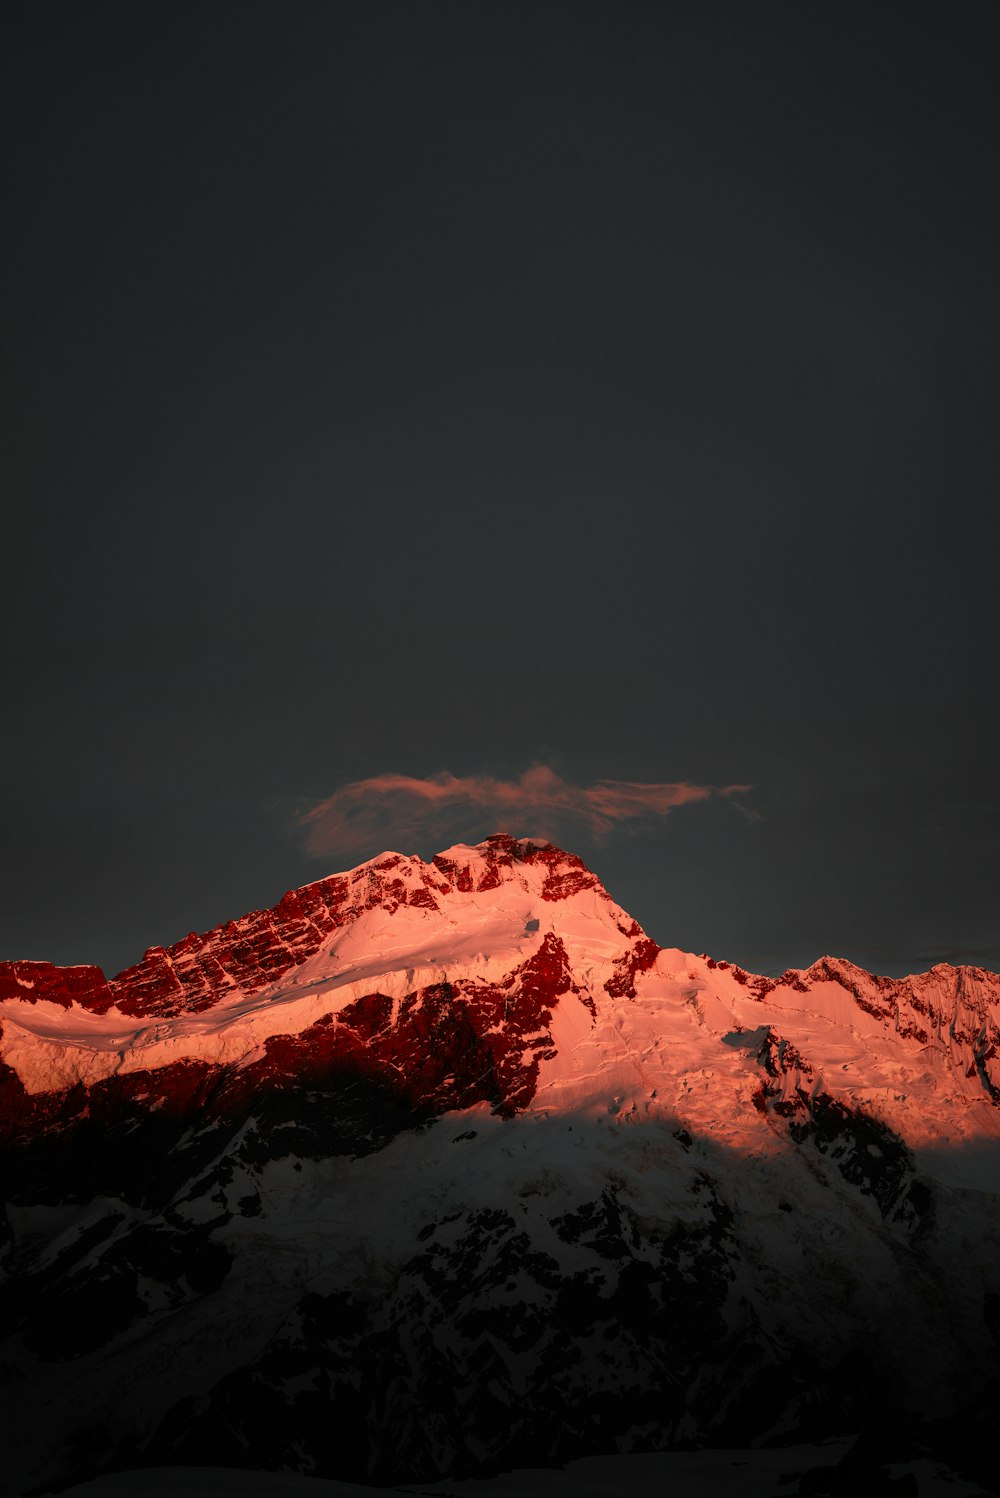 mountain covered in snow under dark sky